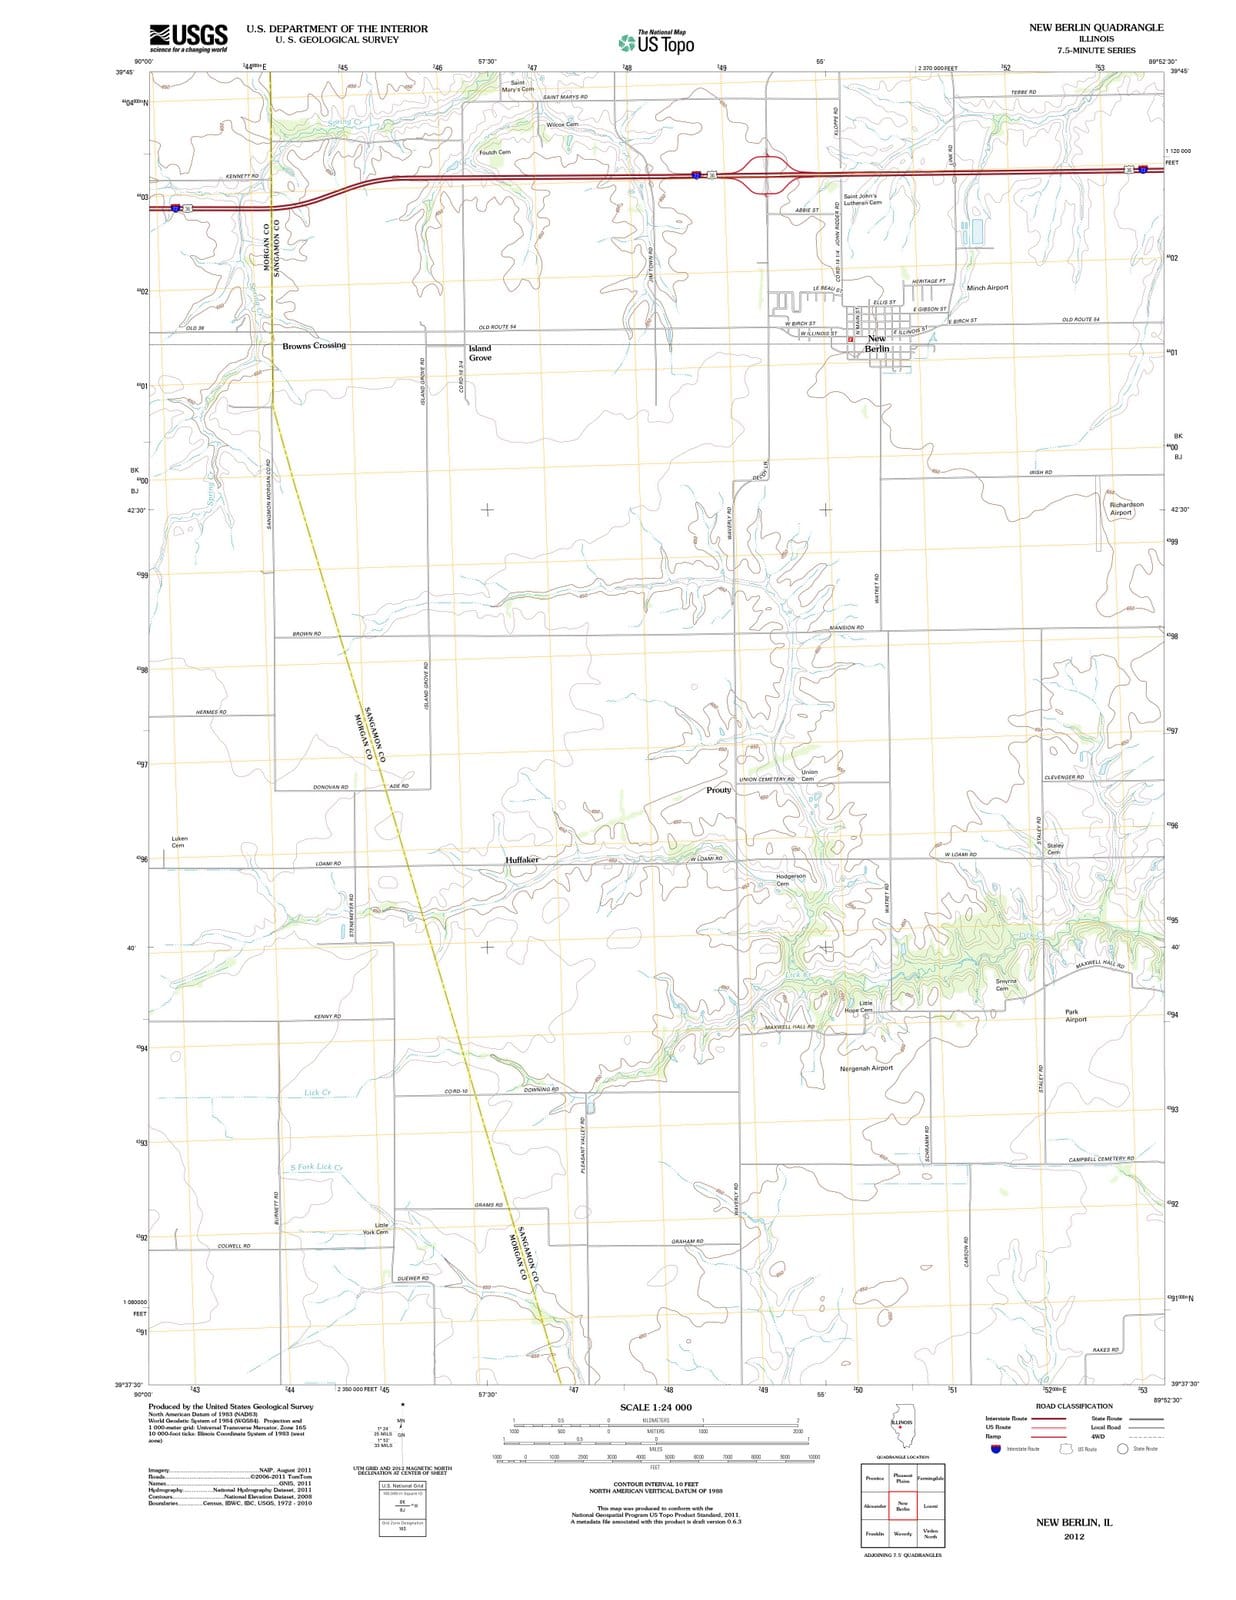 2012 New Berlin, IL - Illinois - USGS Topographic Map